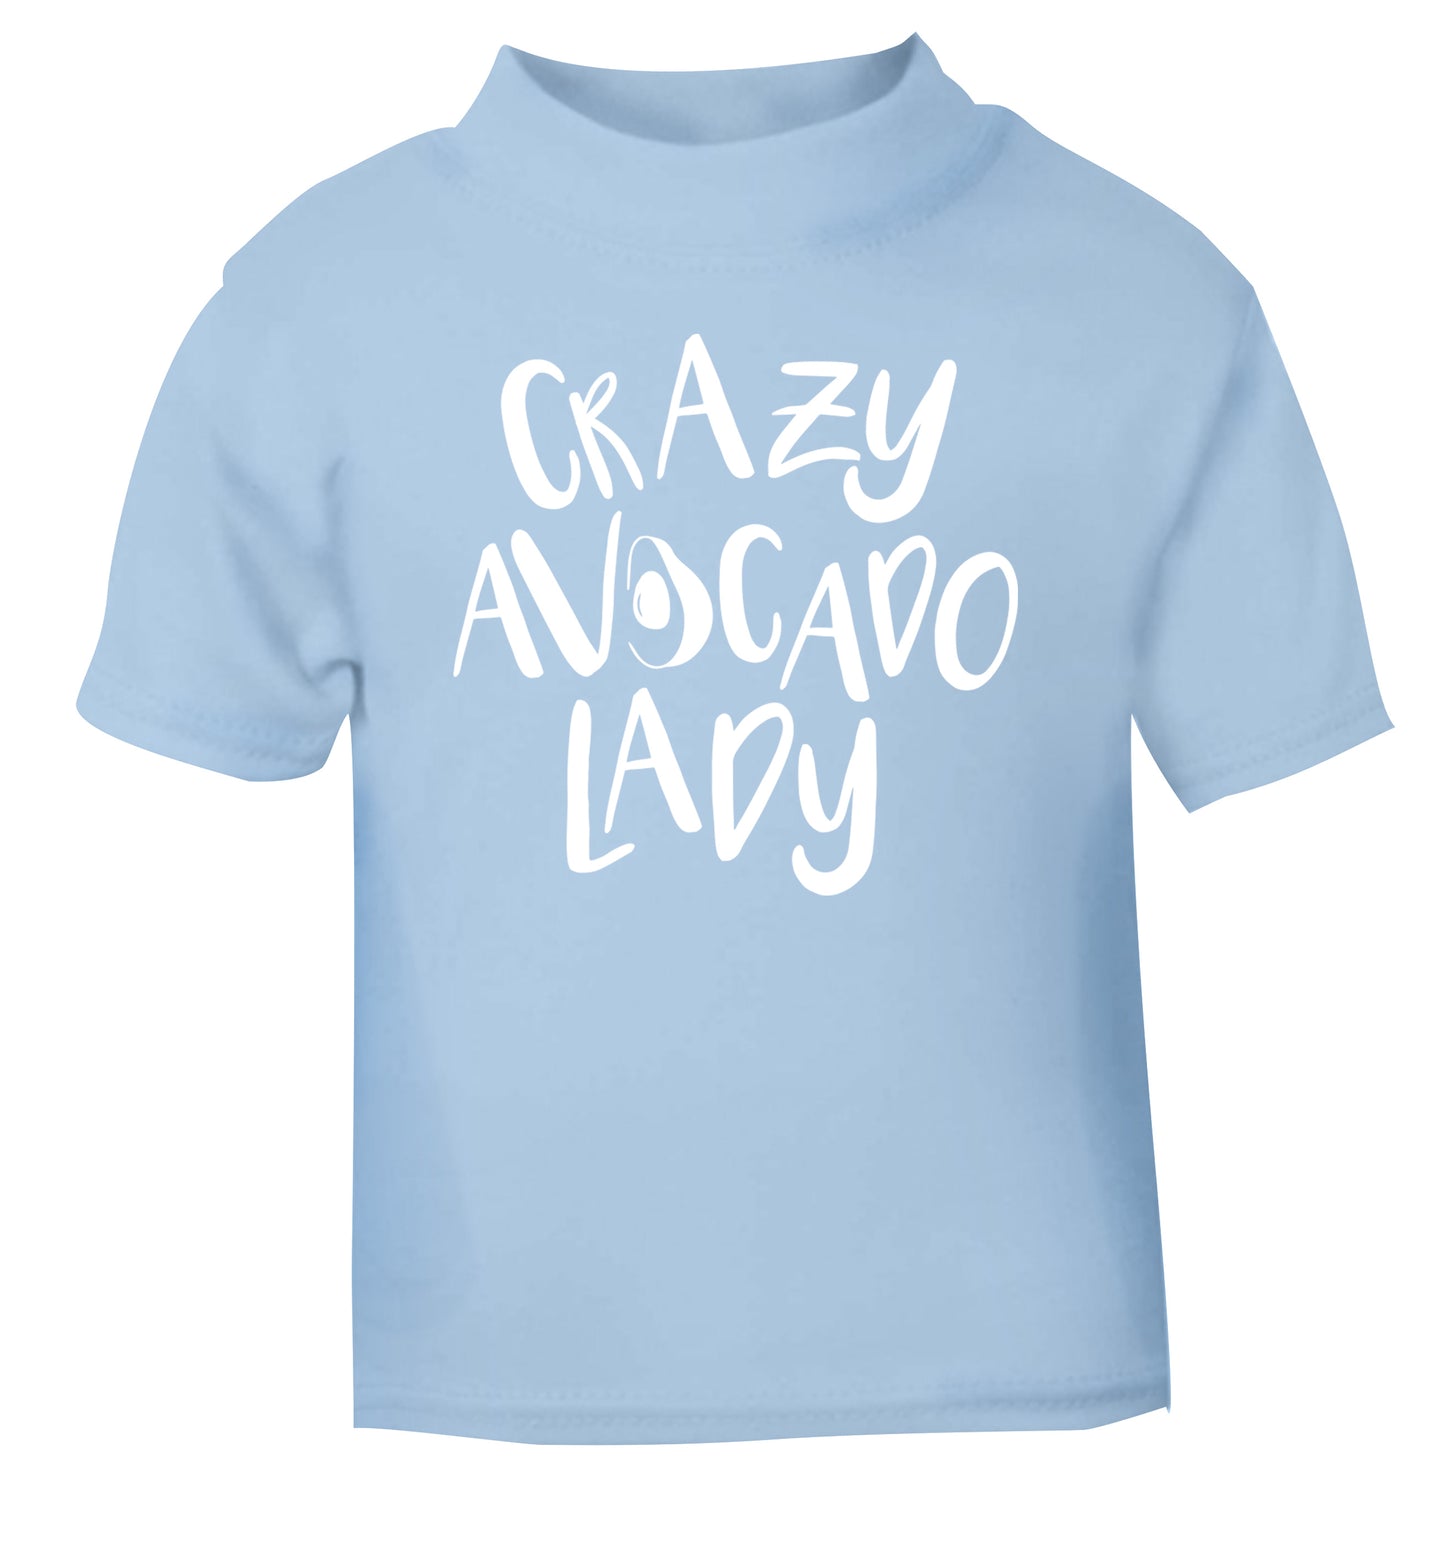 Crazy avocado lady light blue Baby Toddler Tshirt 2 Years